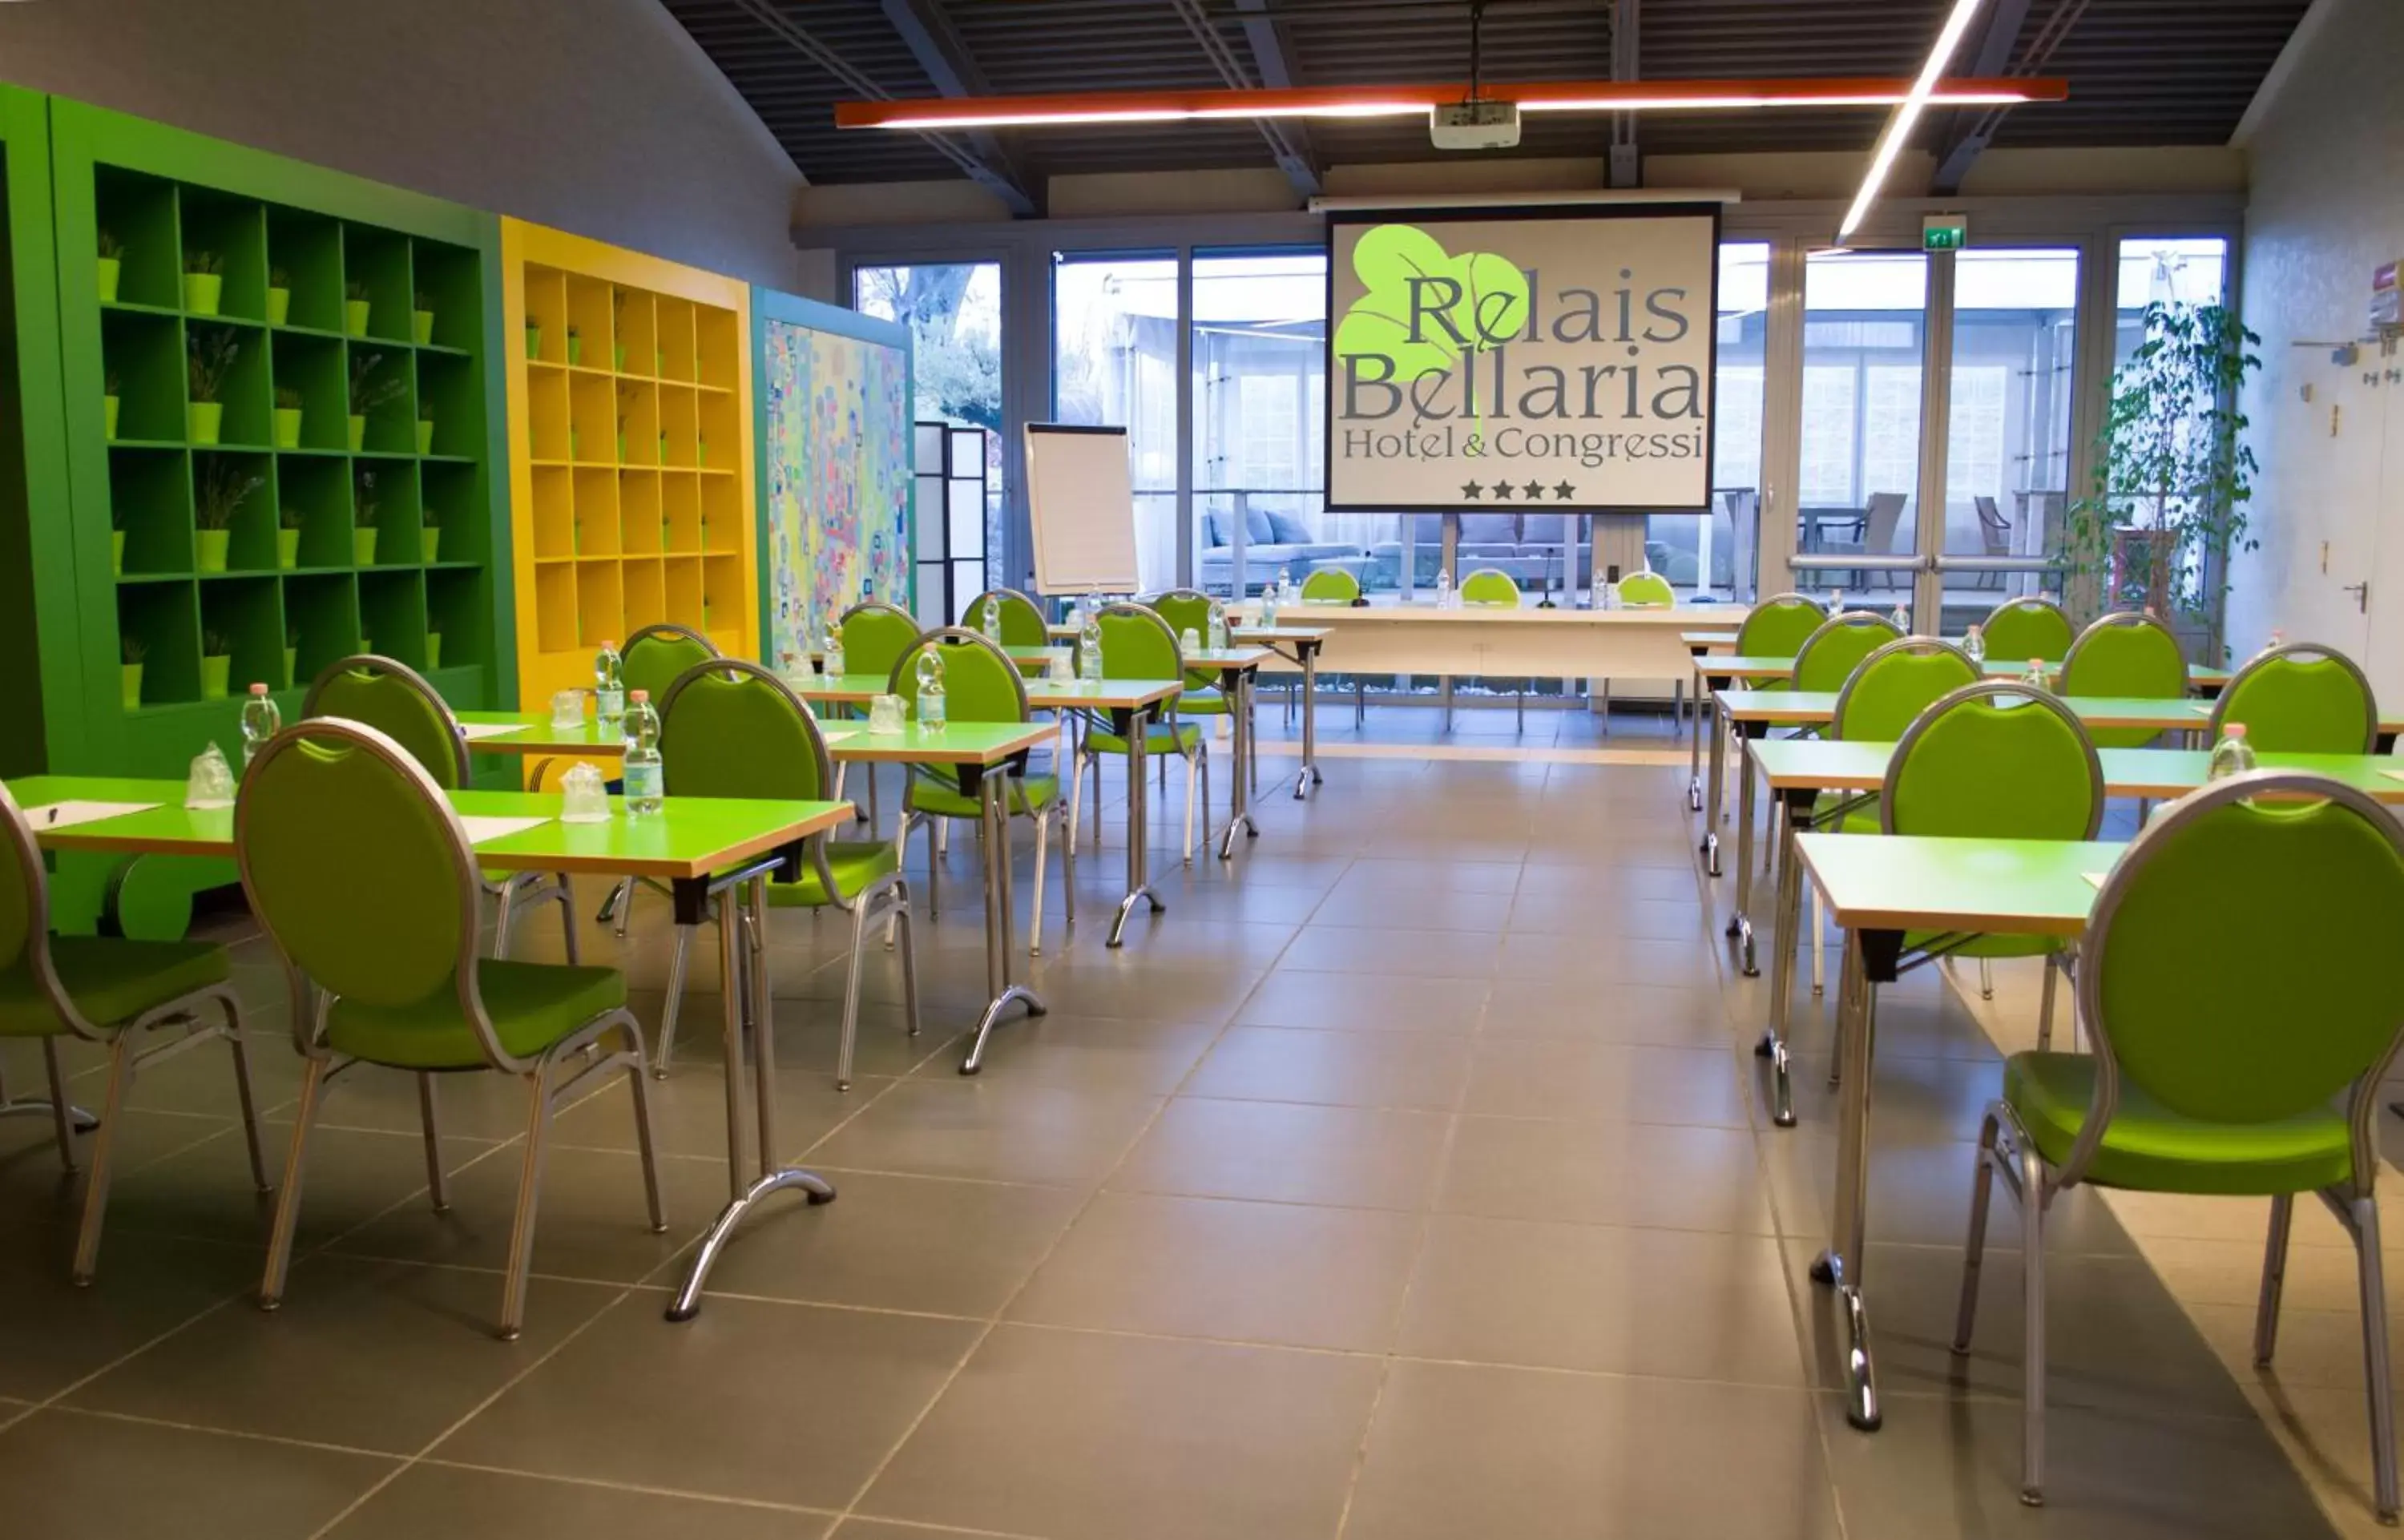 Business facilities, Restaurant/Places to Eat in Relais Bellaria Hotel & Congressi